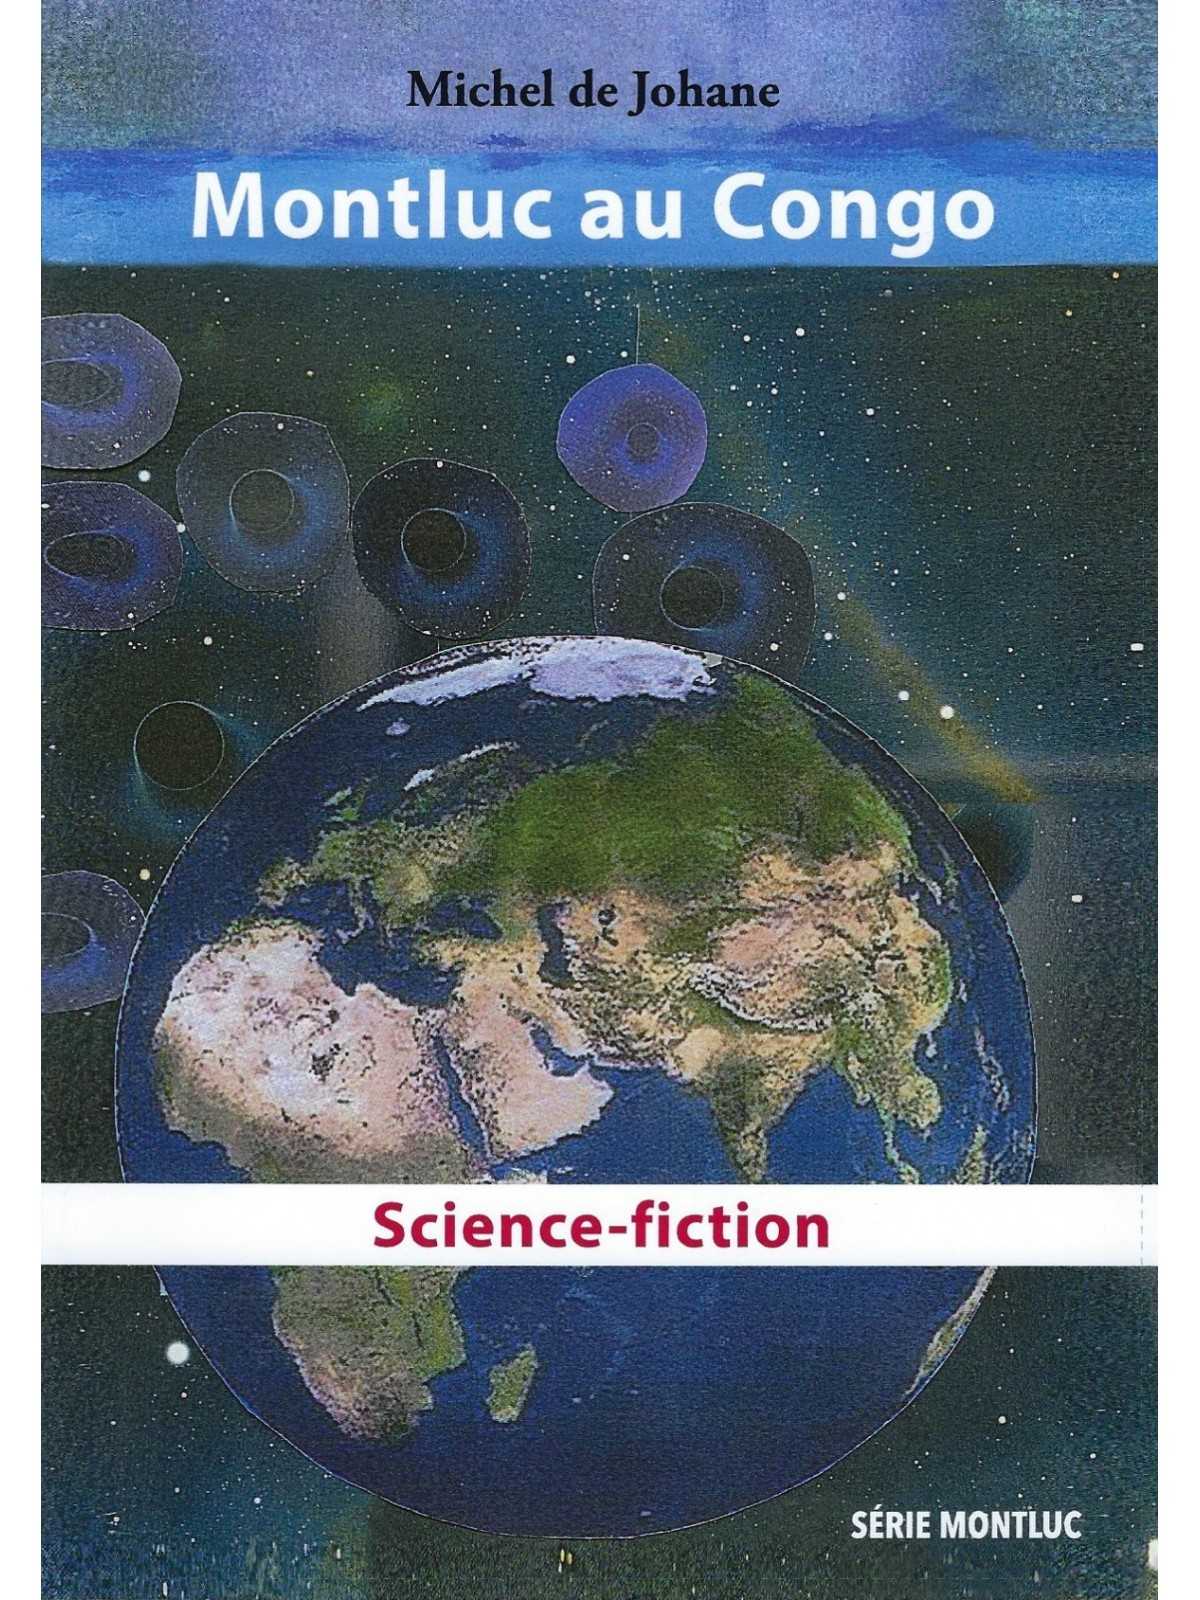 Michel de Johane : Montluc au Congo